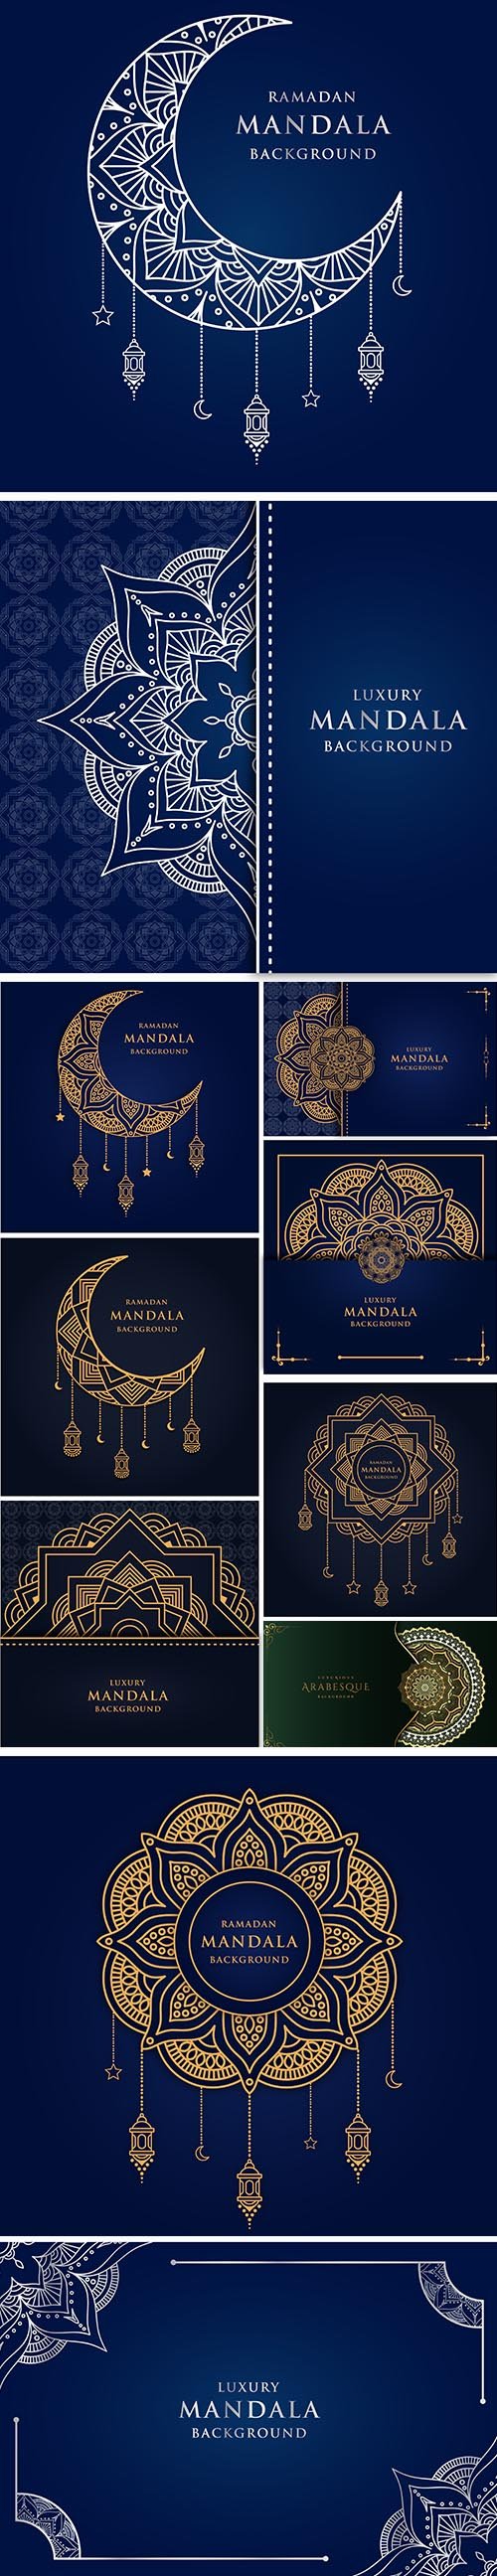 Creative Luxury Mandala Backgrounds